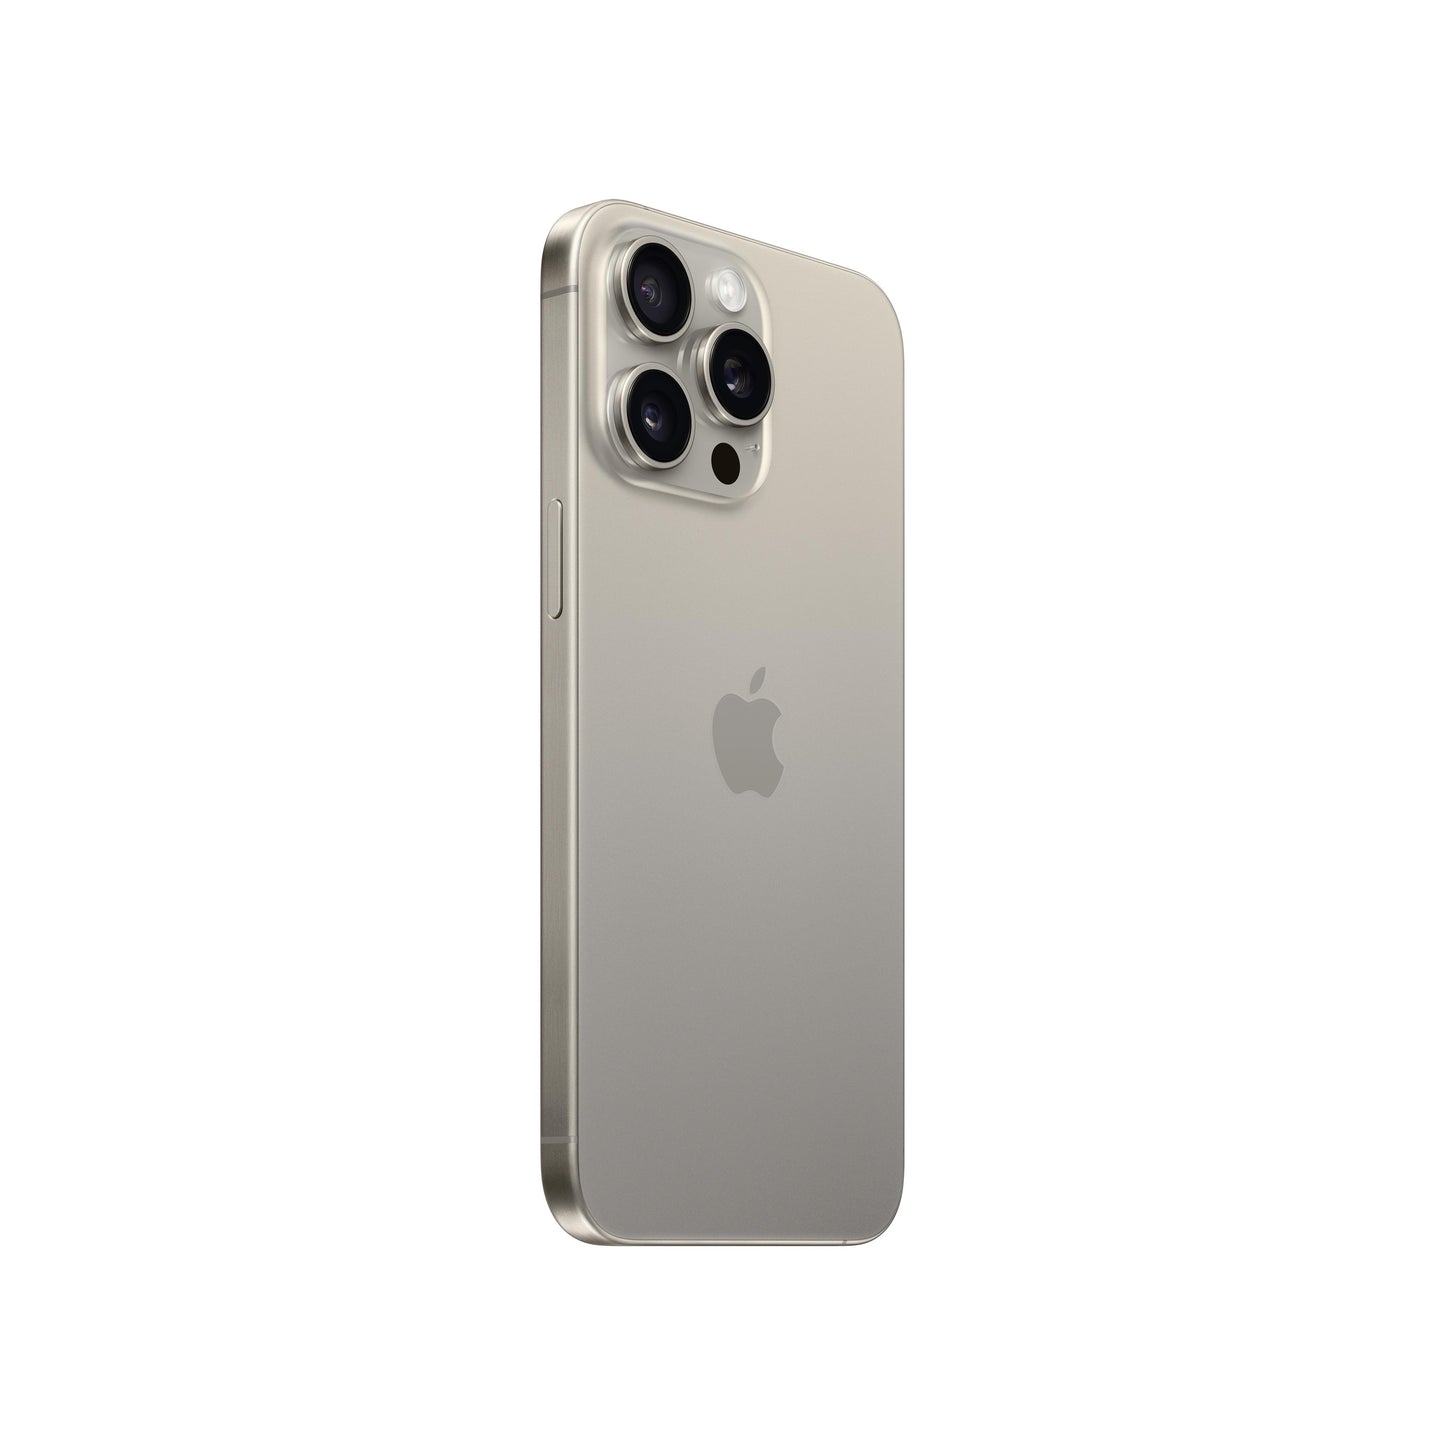 iPhone Pro Max in Natural Titanium, 1TB Storage. EMI available |Get best offers for iphone 15 pro Max [variant] Natural Titanium 1TB.